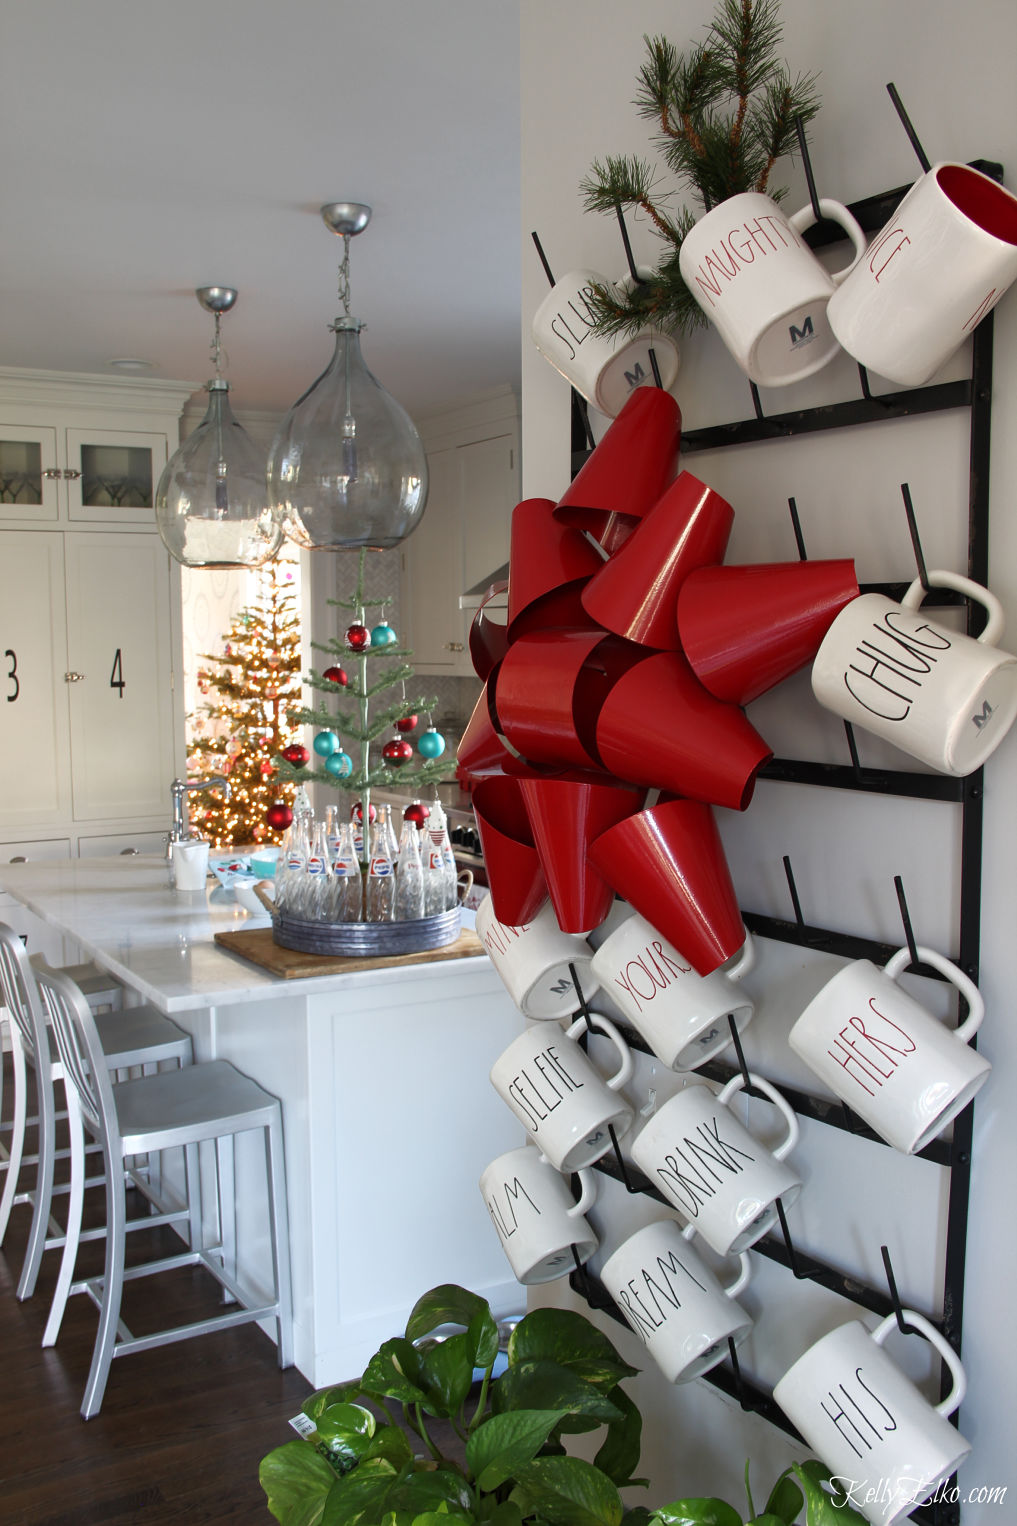 Love this red teal Christmas kitchen and the giant rack of Rae Dunn mugs kellyelko.com #christmas #christmaskitchen #christmasdecor #christmasdecorating #vintagechristmas #farmhousechristmas 